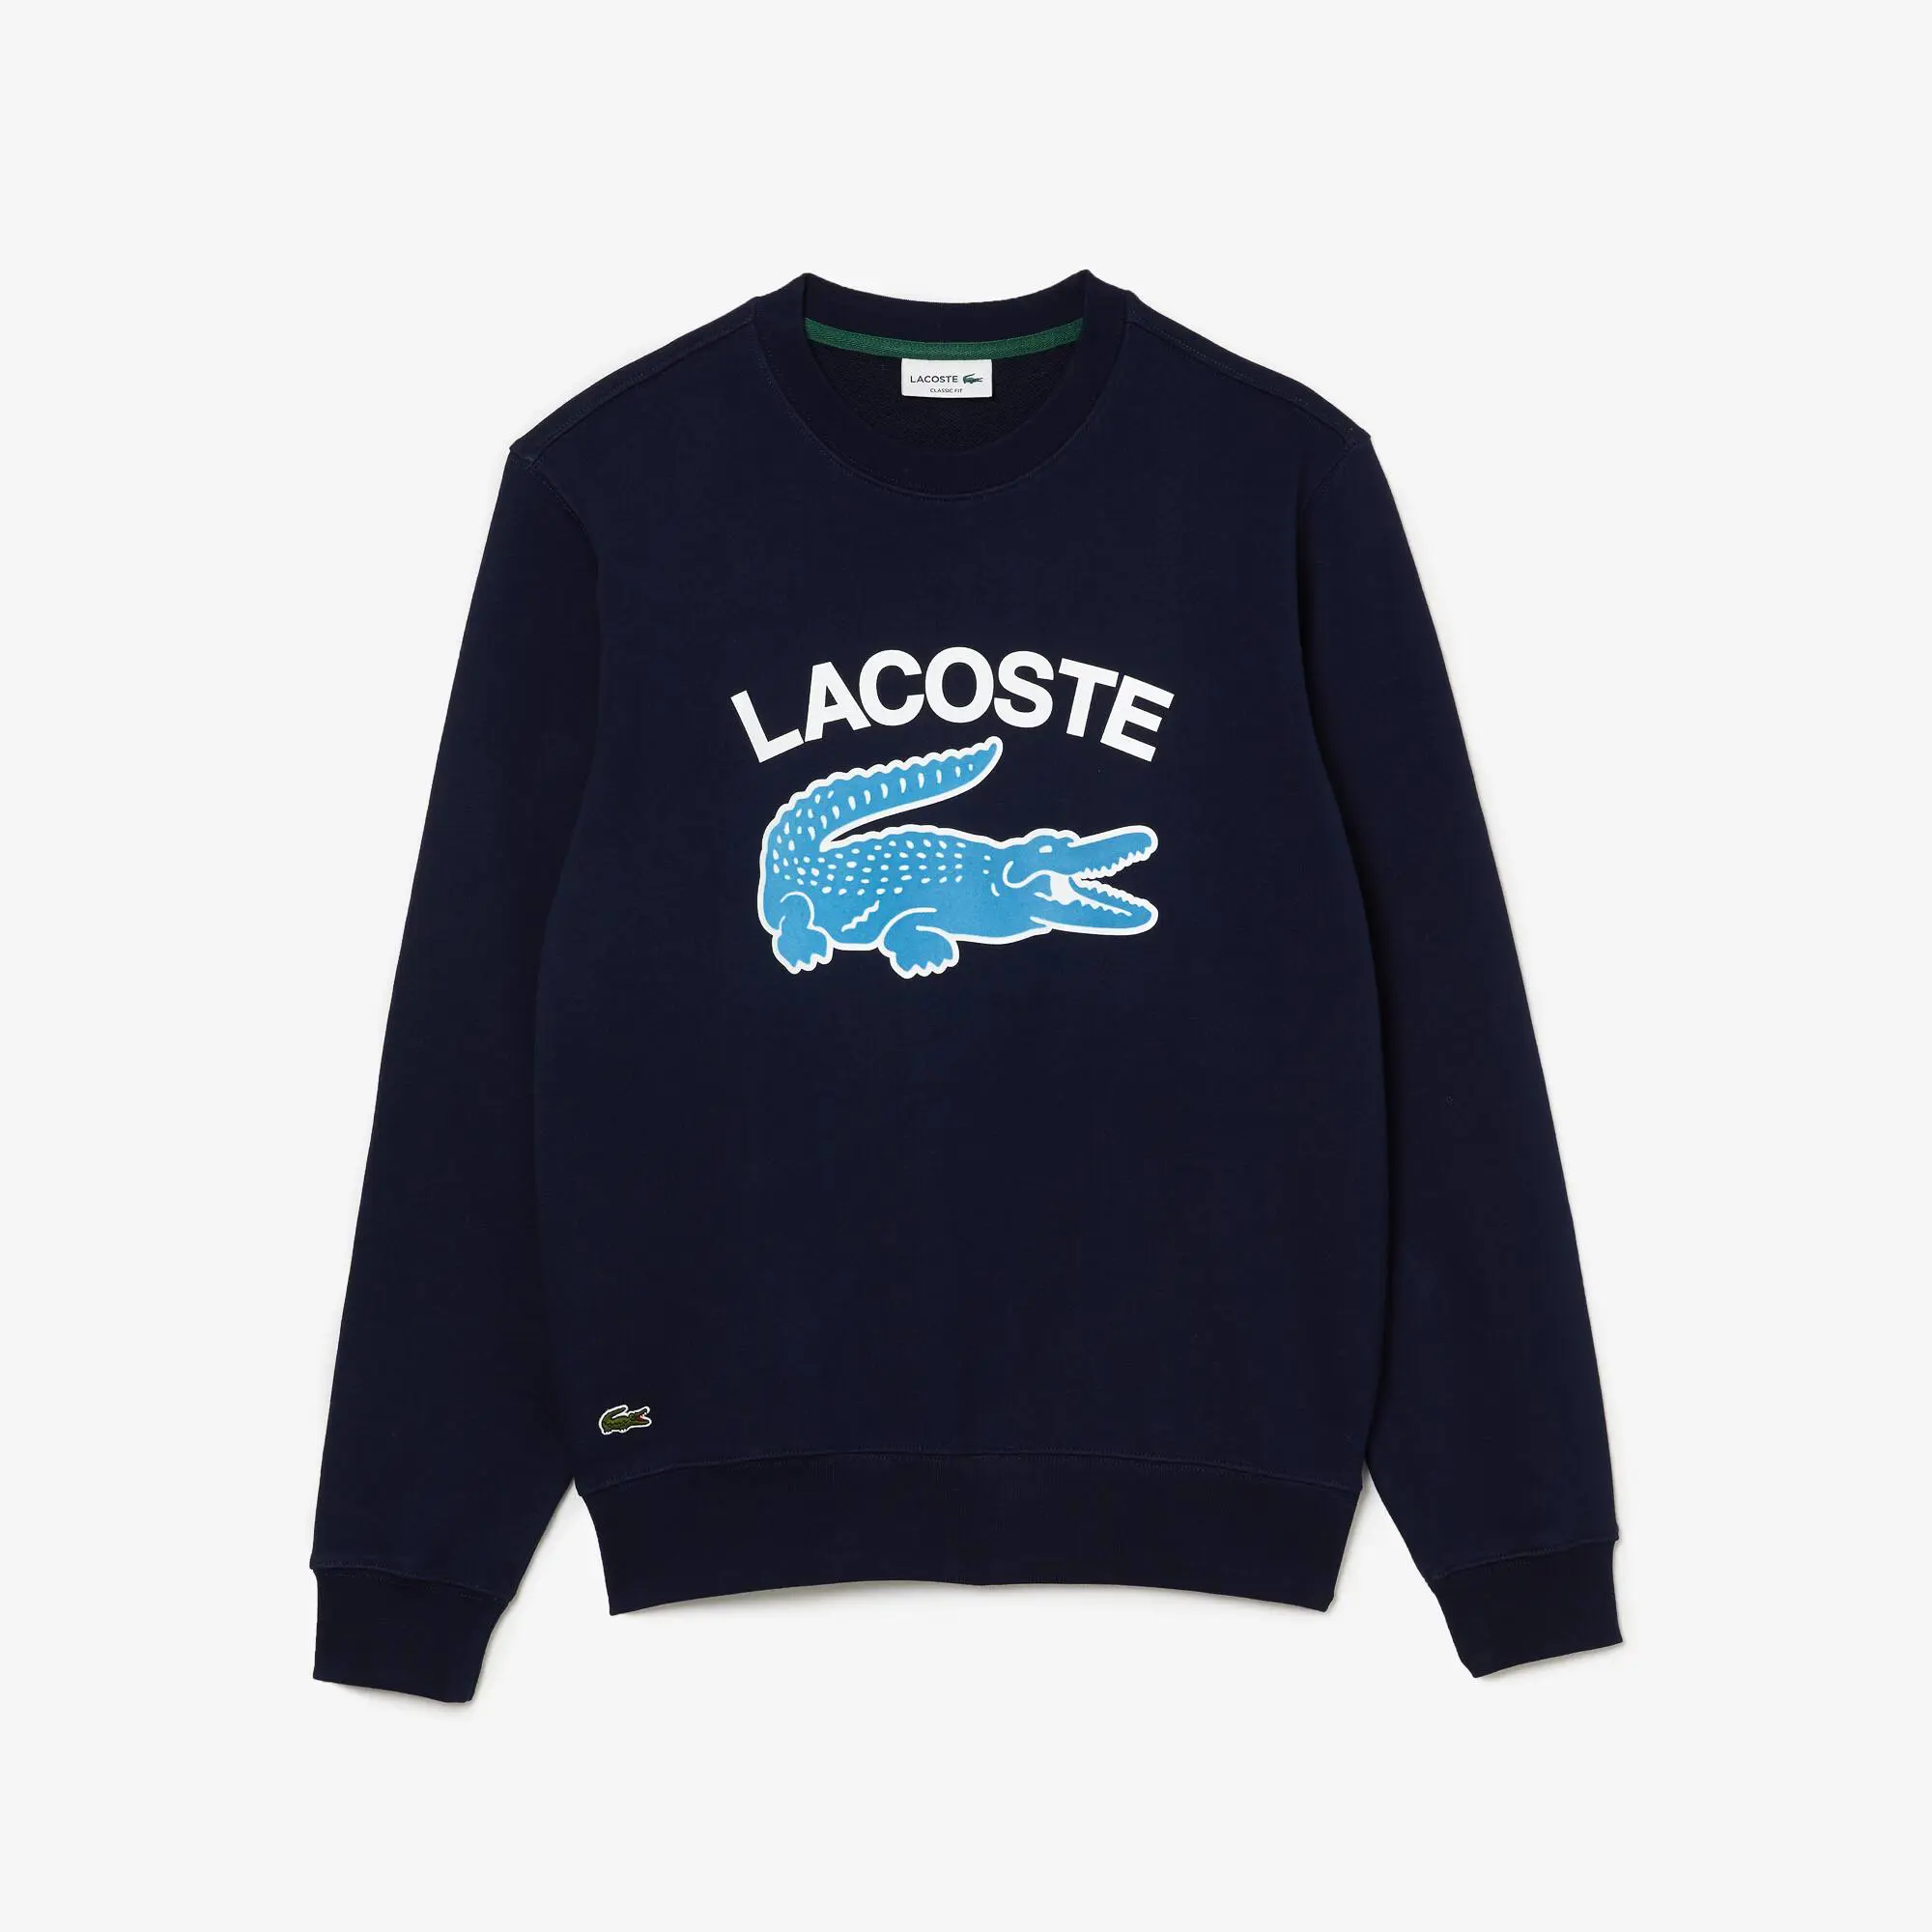 Lacoste Men's Lacoste Crocodile Print Crew Neck Sweatshirt. 2